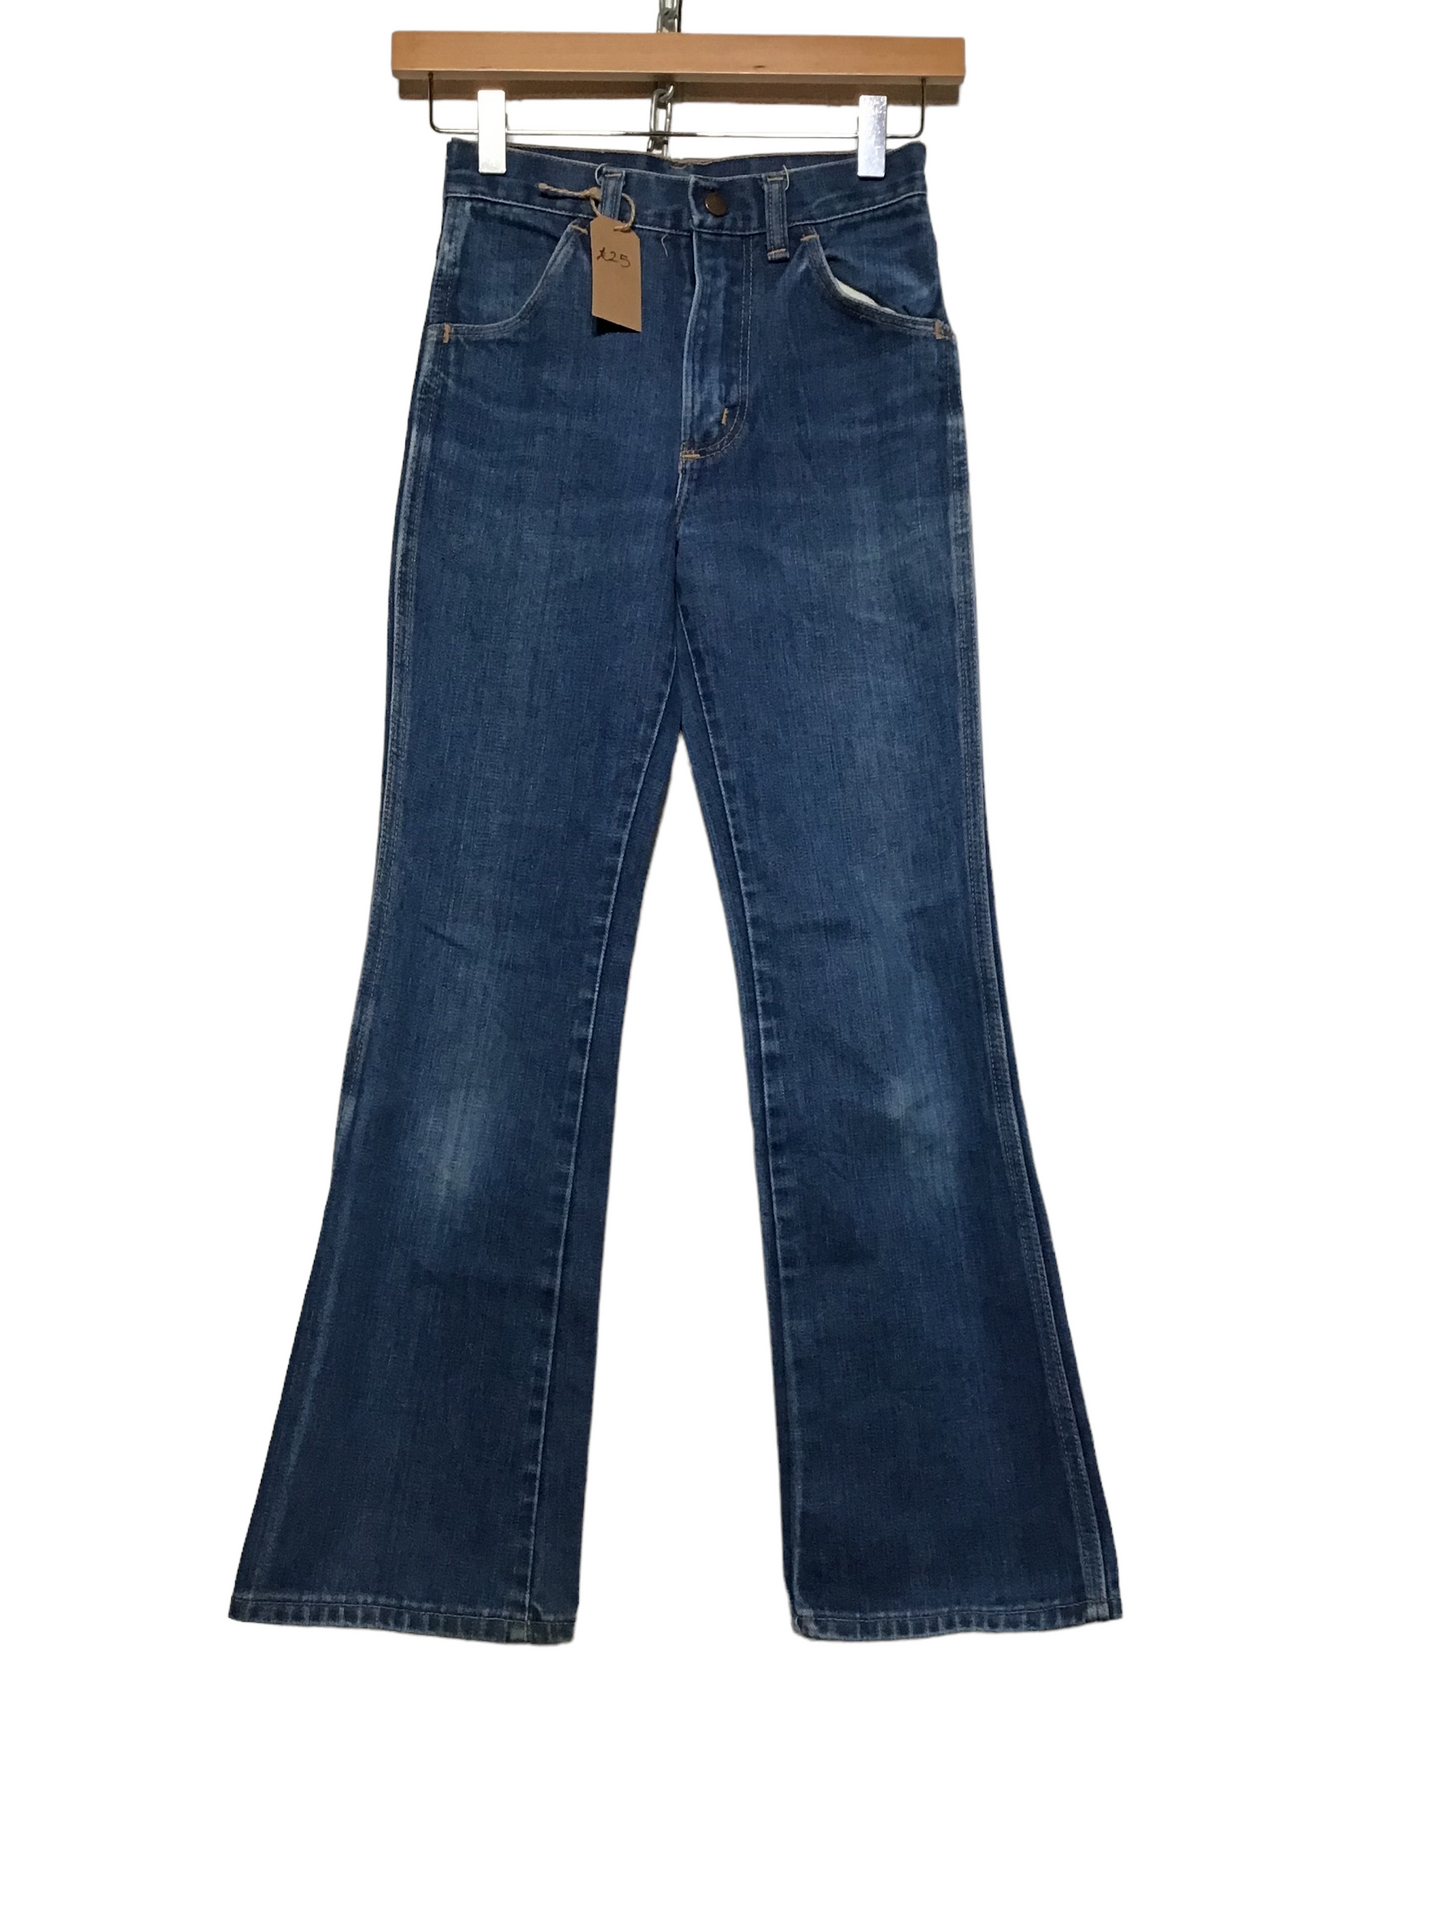 Wrangler Jeans (24X26)